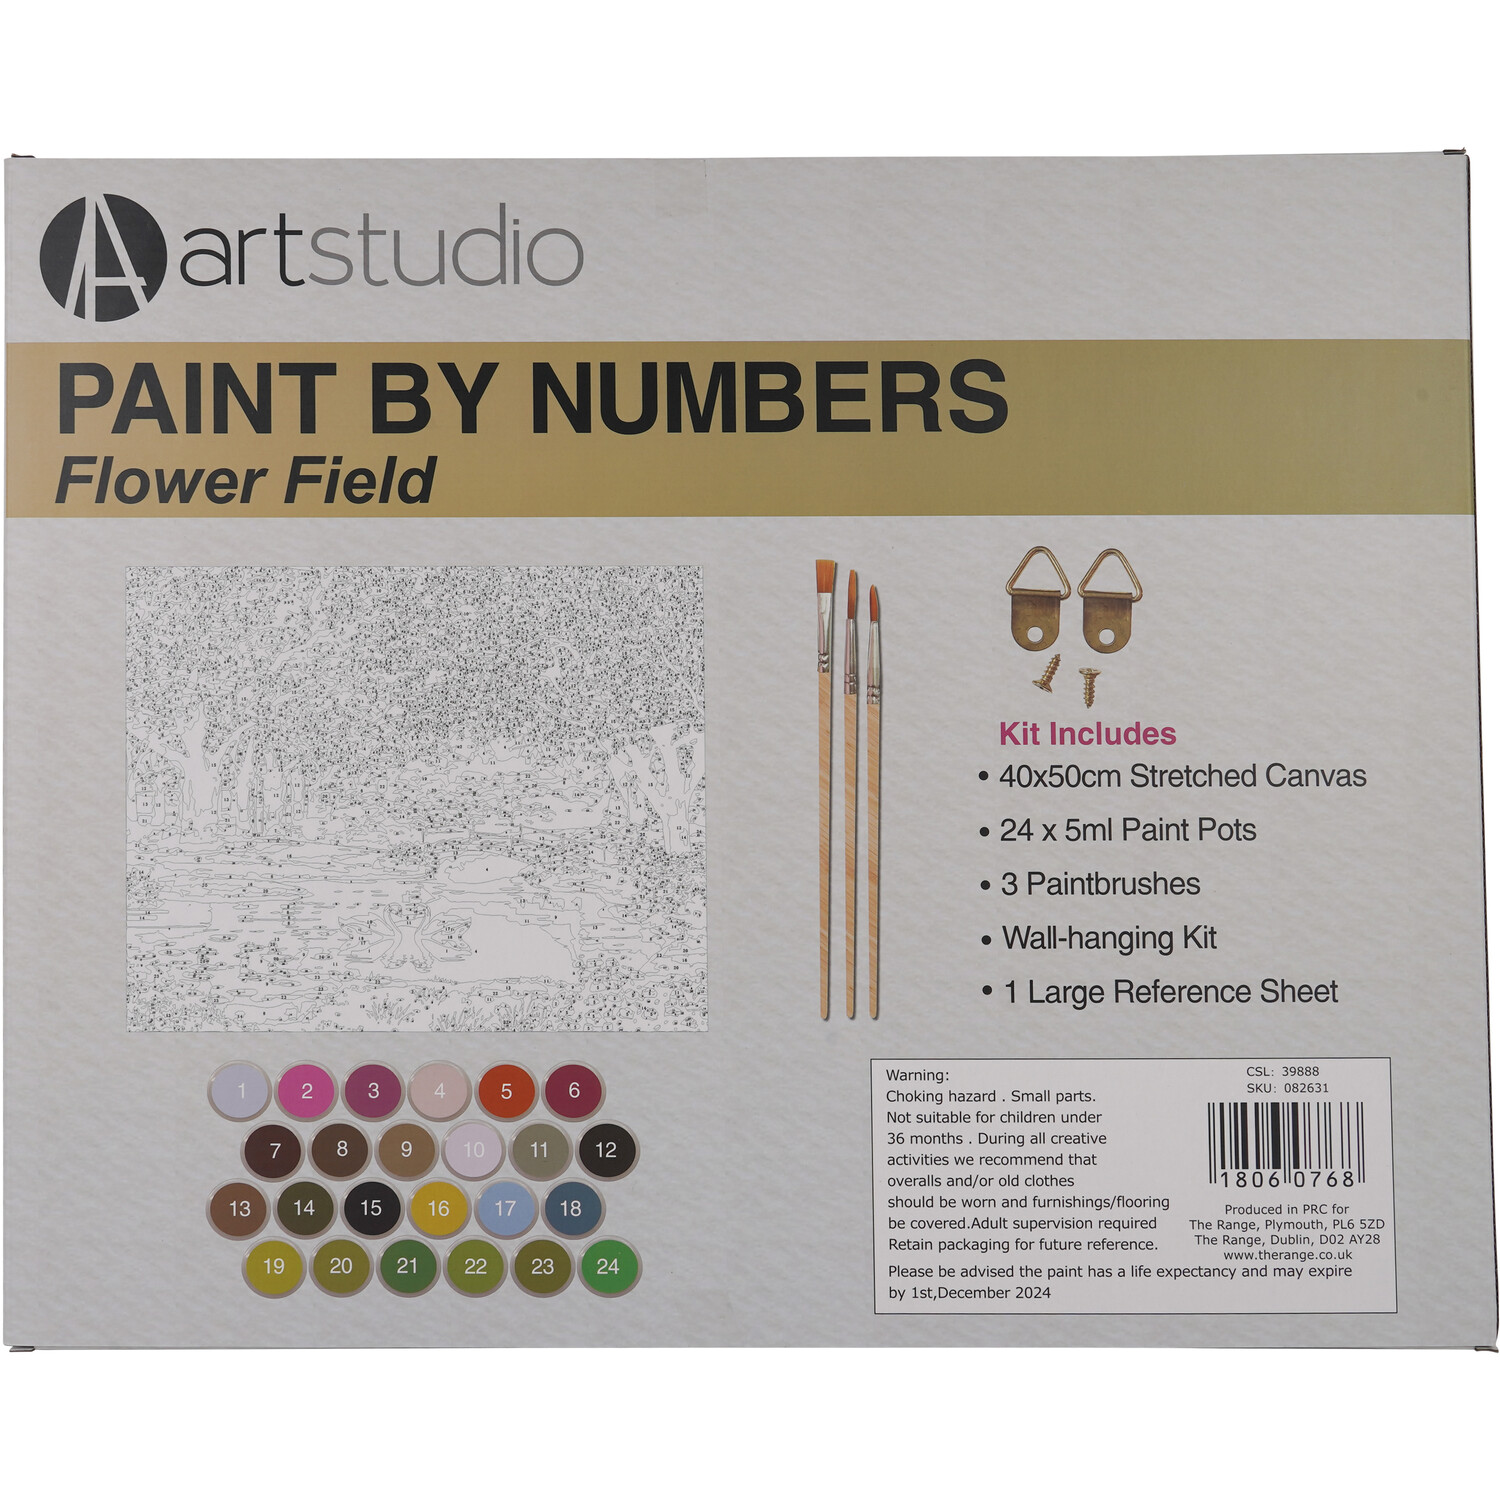 Art Studio Paint by Numbers - Flower Field Image 3